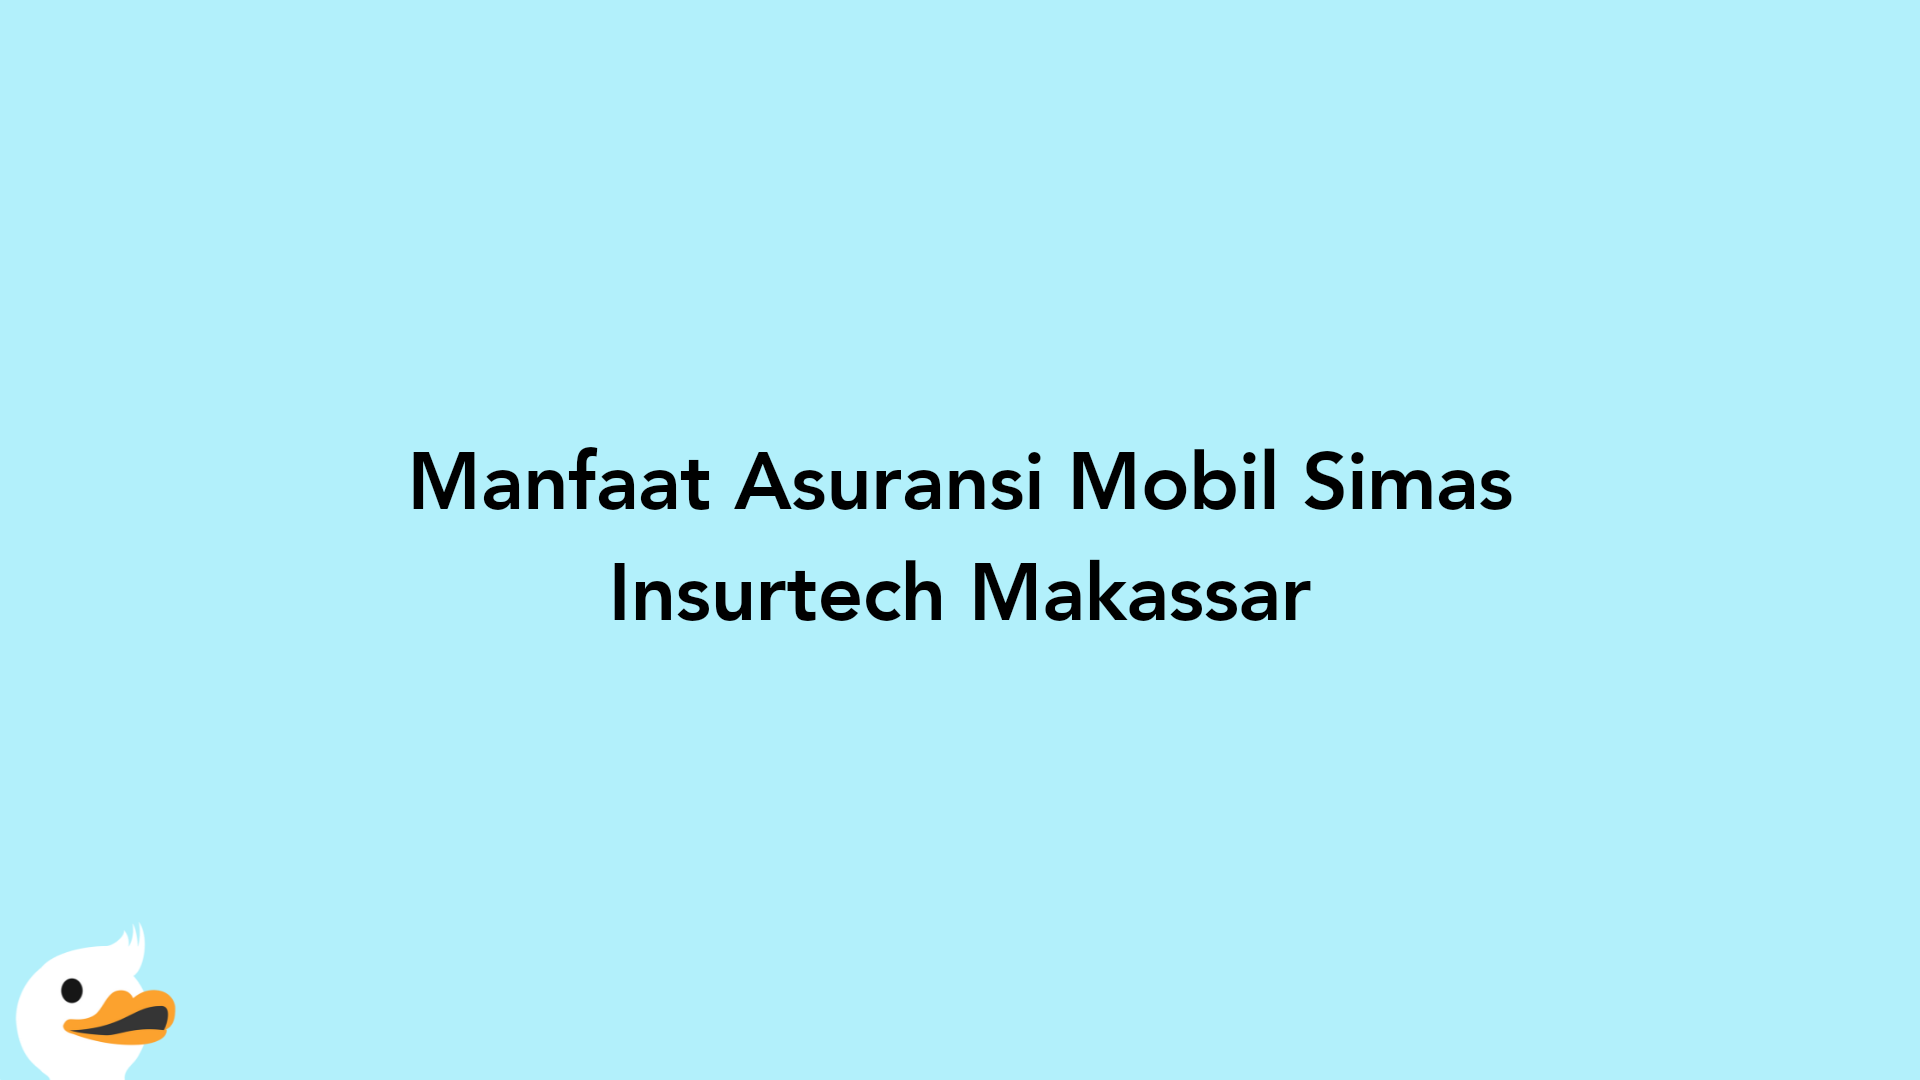 Manfaat Asuransi Mobil Simas Insurtech Makassar